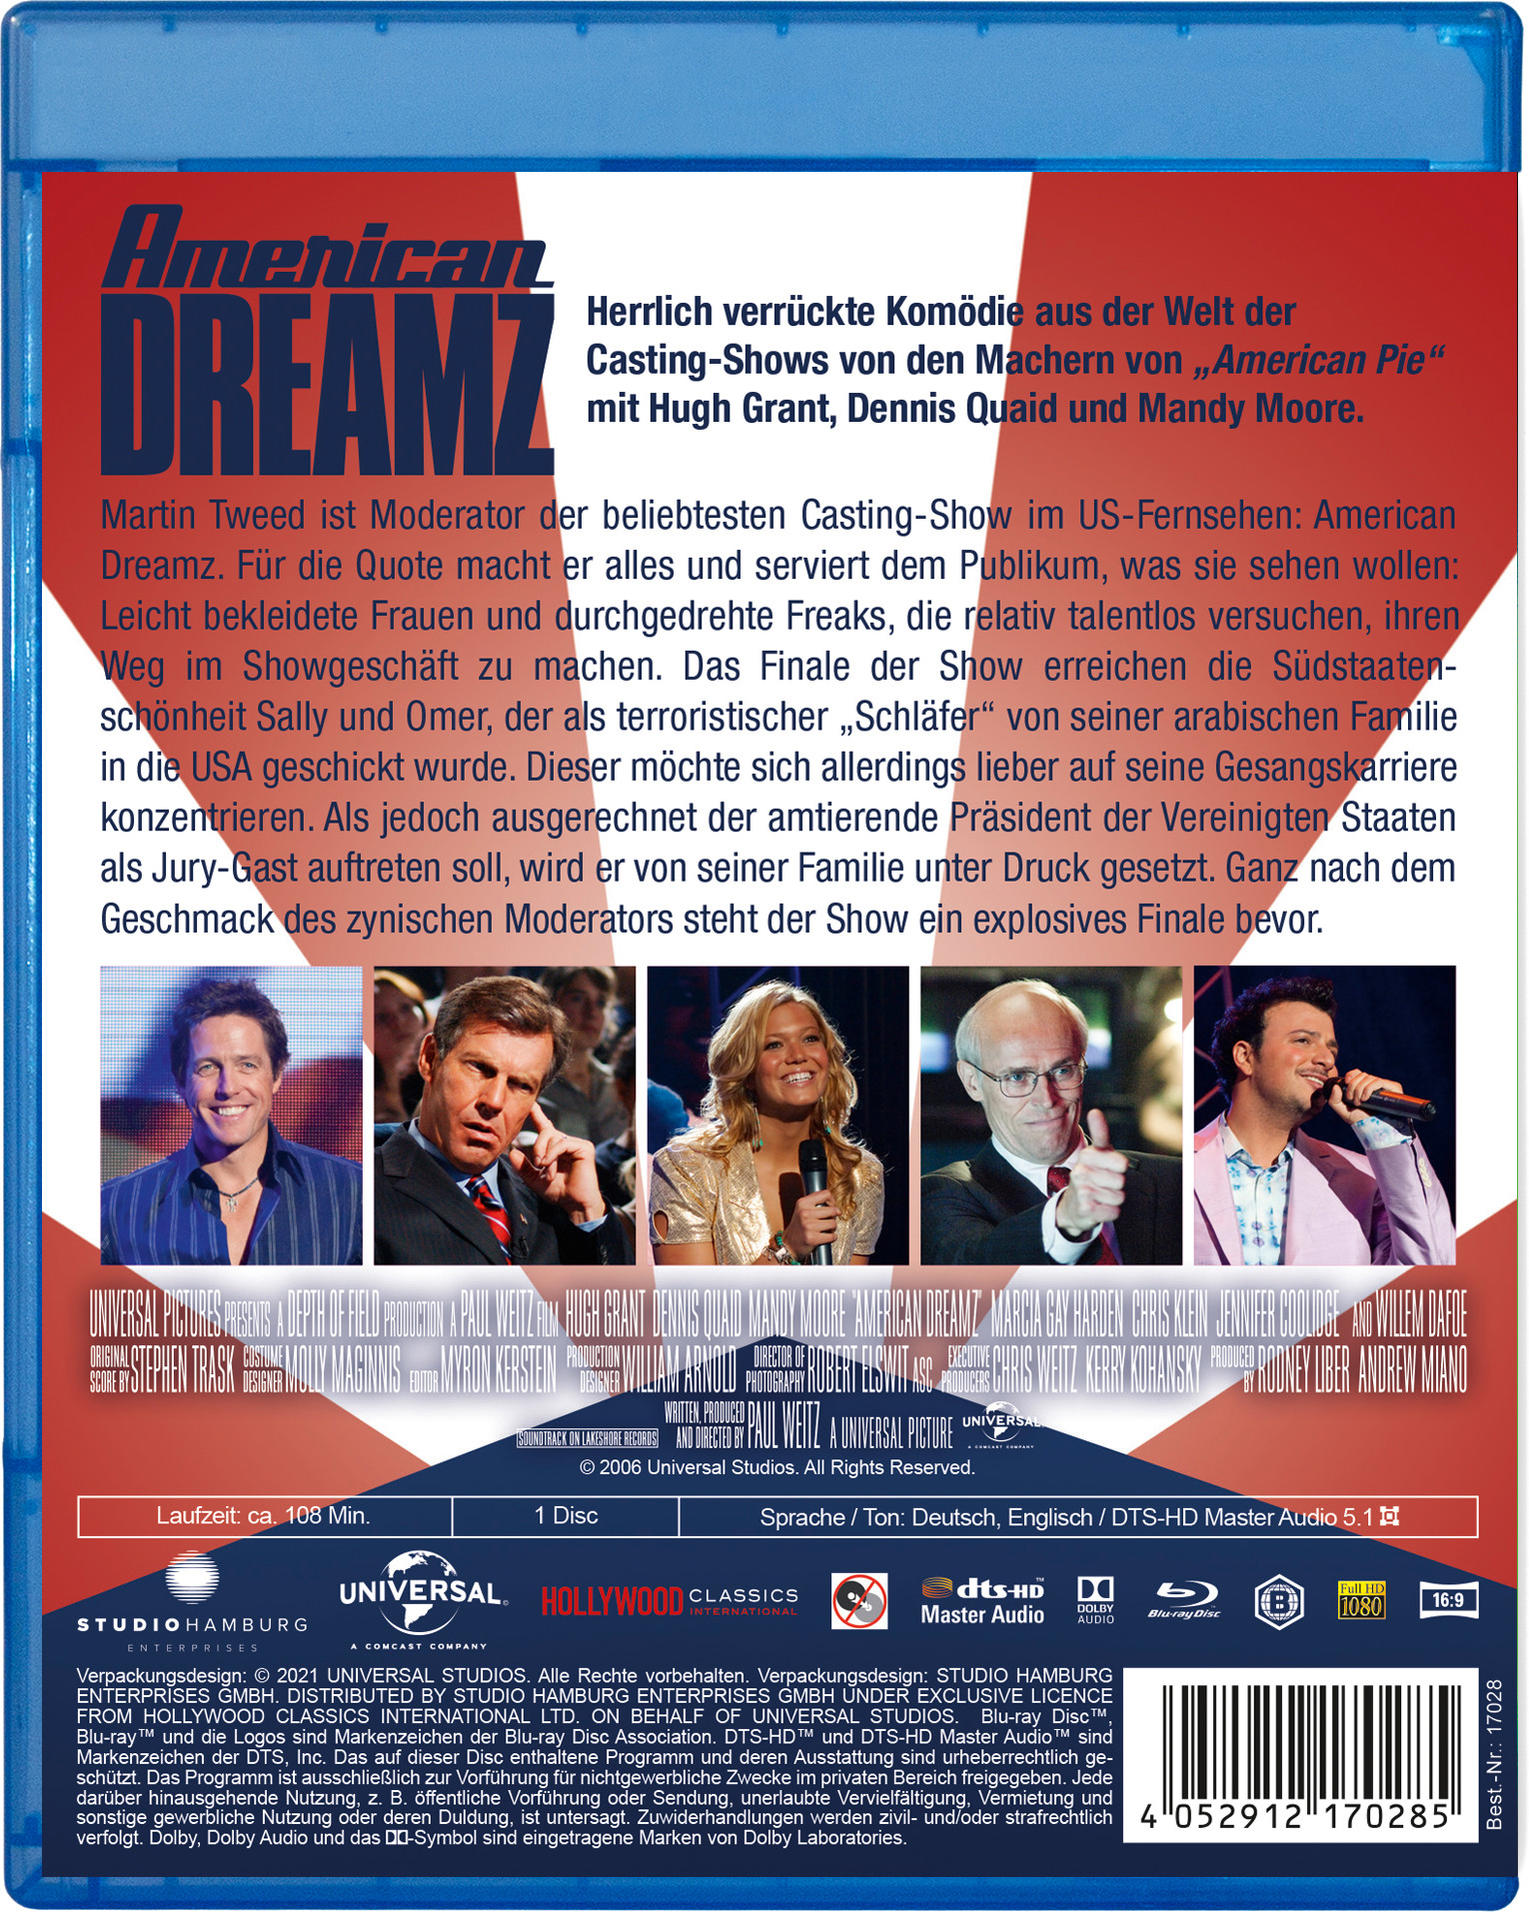 Blu-ray Show Dreamz American nur Alles -